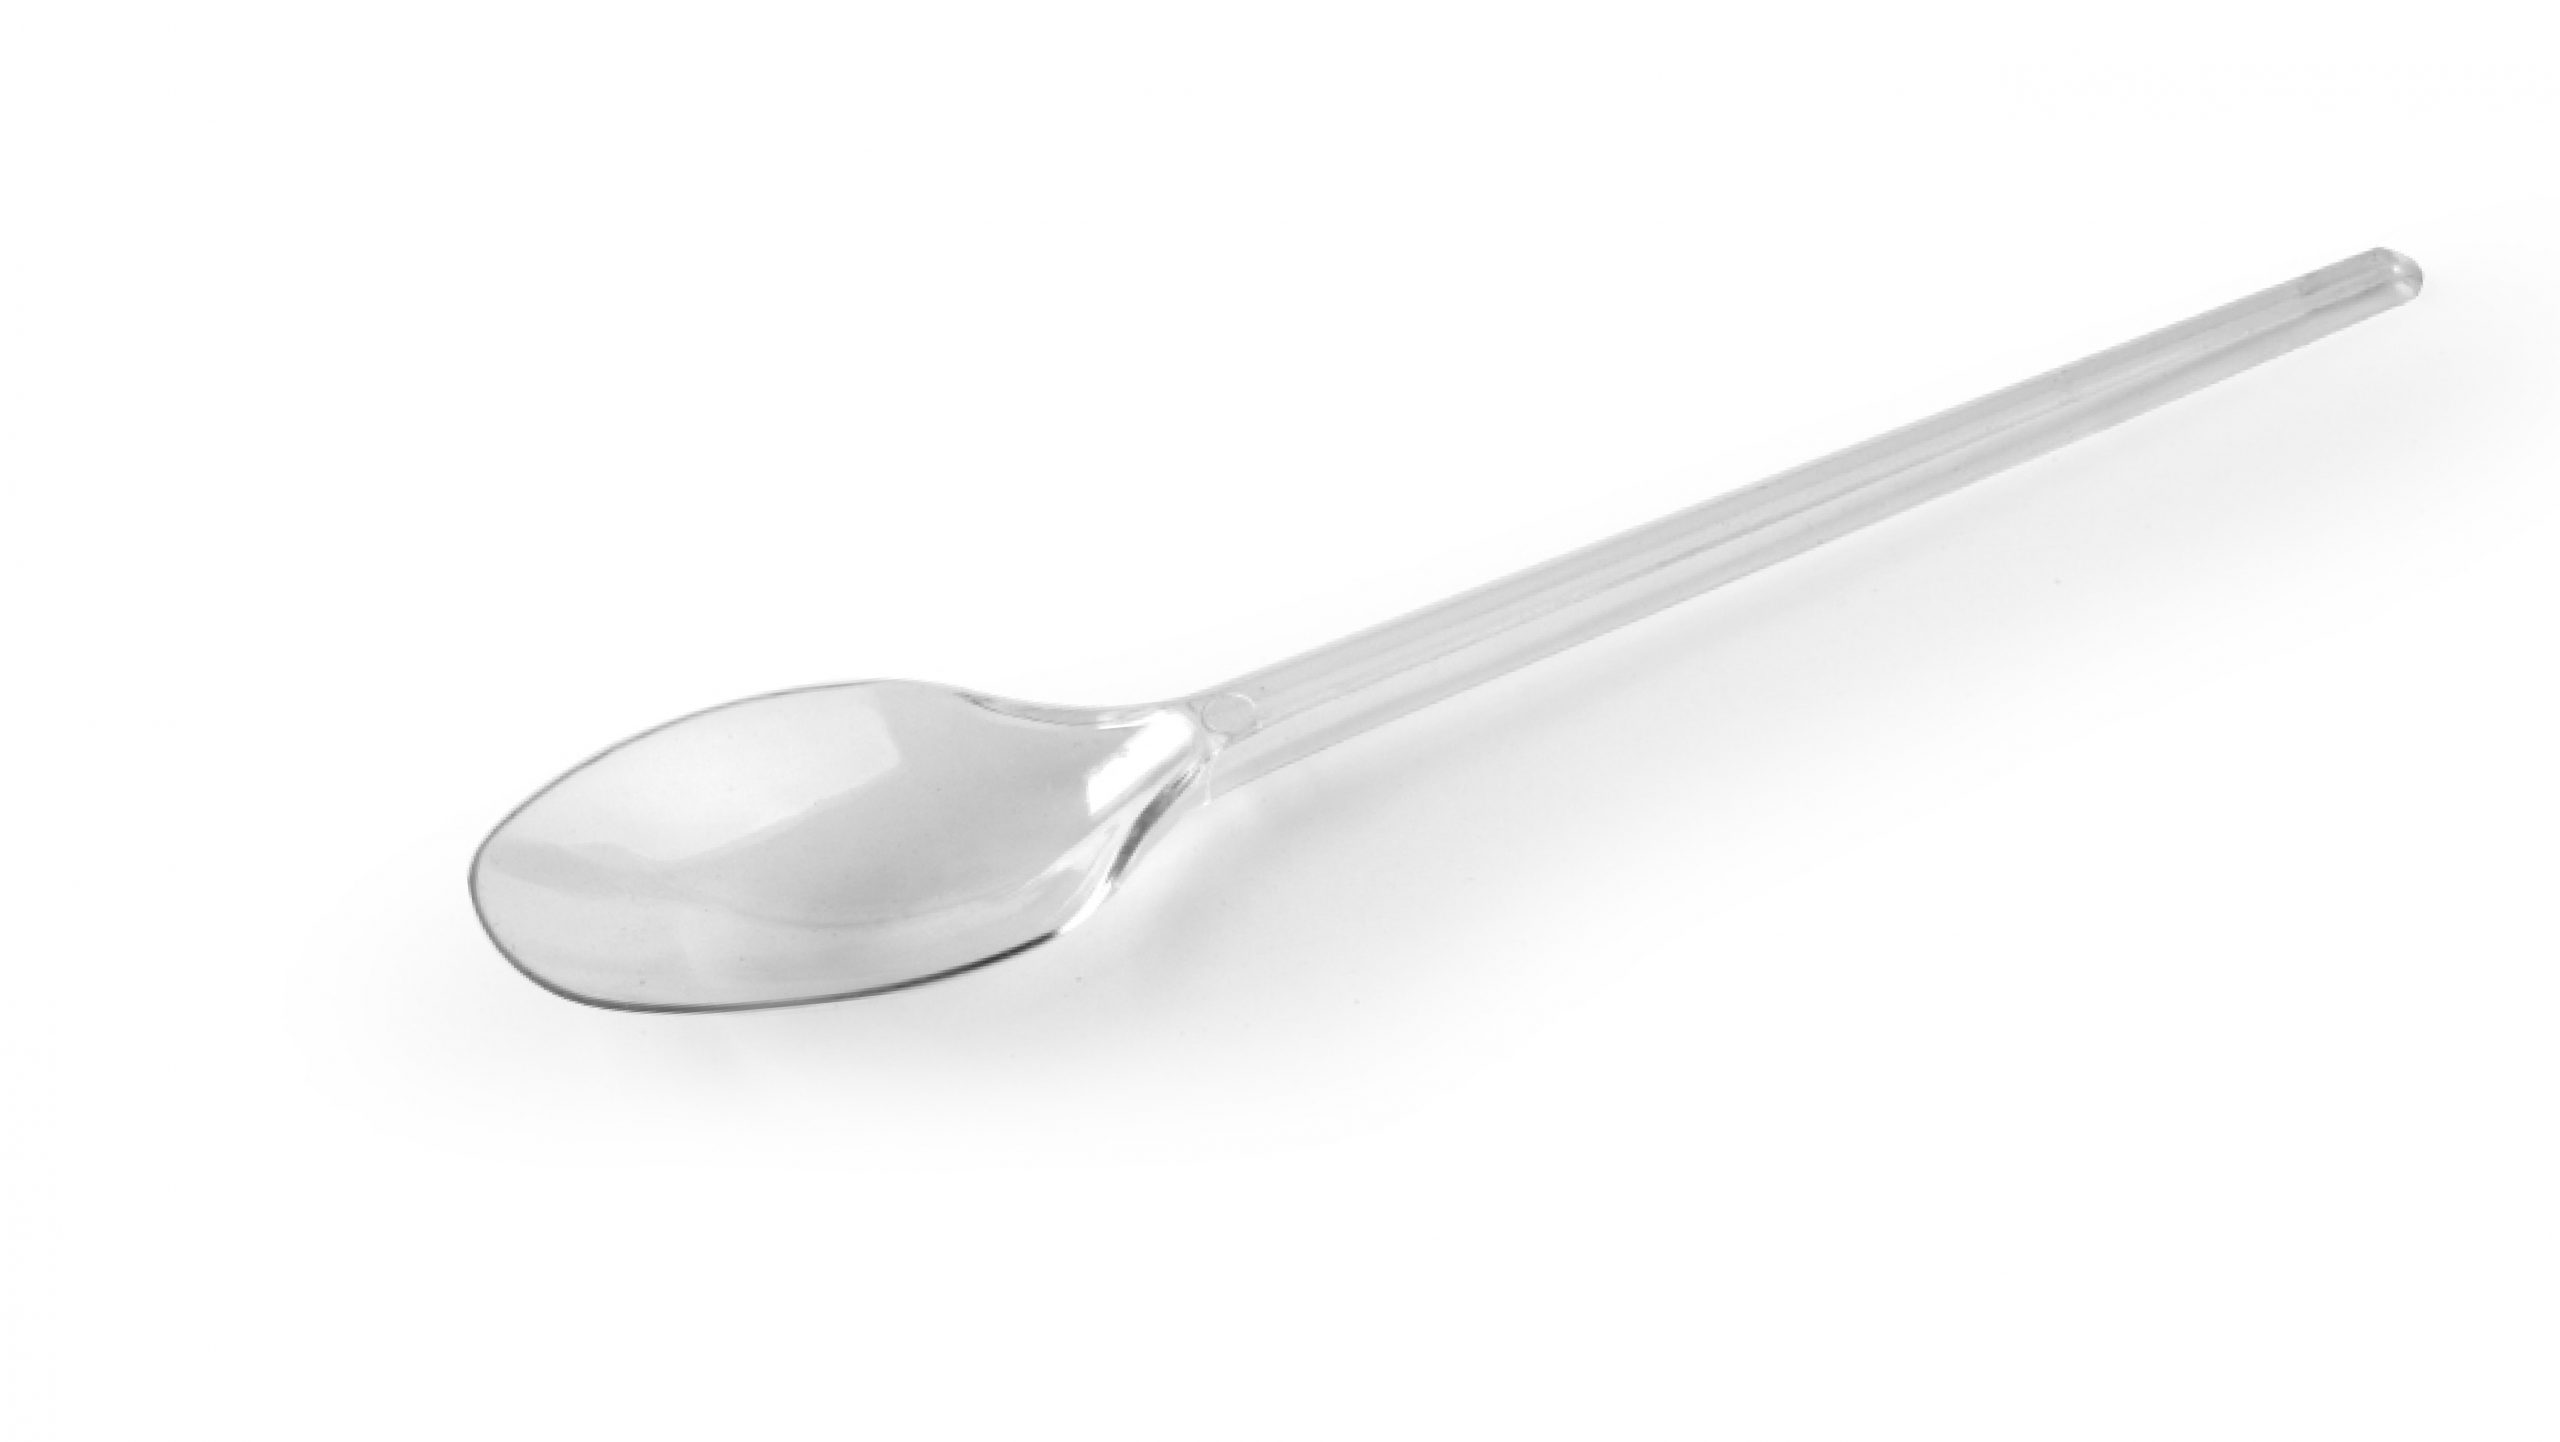 062-64 Large crystal Spoon